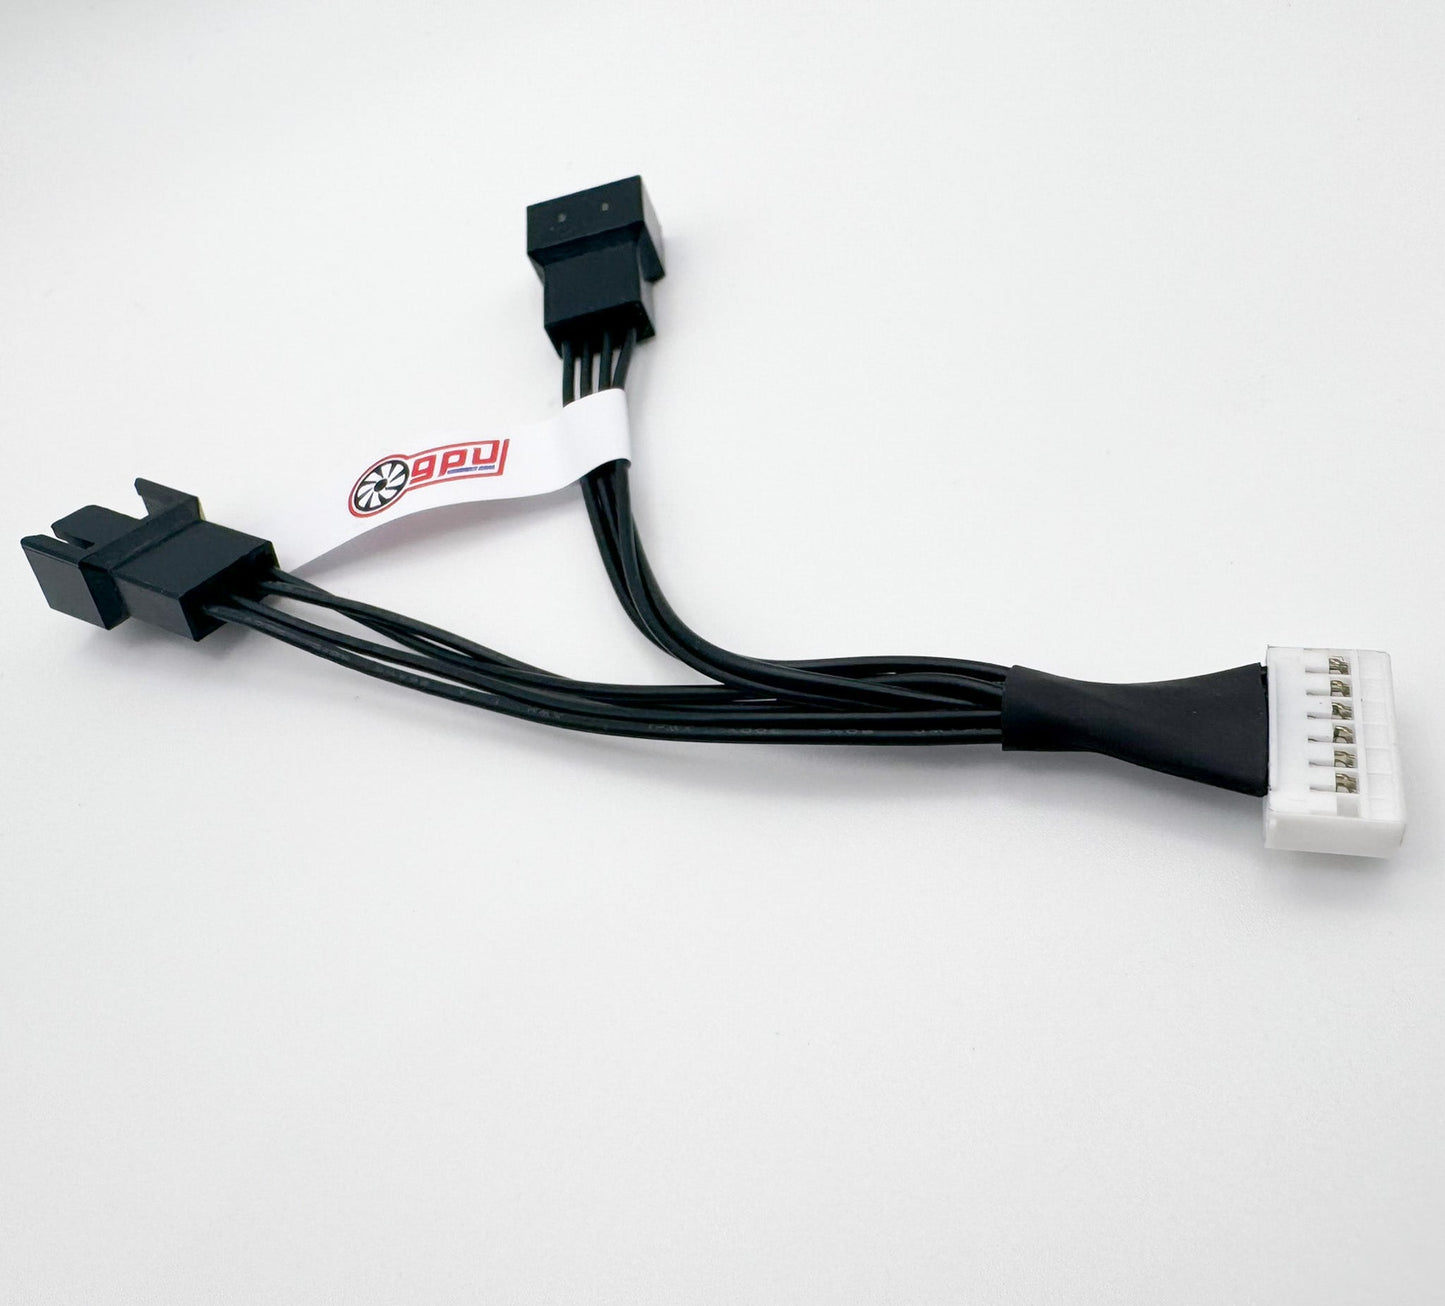 Asus RTX 3060 3070 3080 3090 Ti STRIX 7 Pin PWM Adapter Deshroud Cable - GPUCONNECT.COM